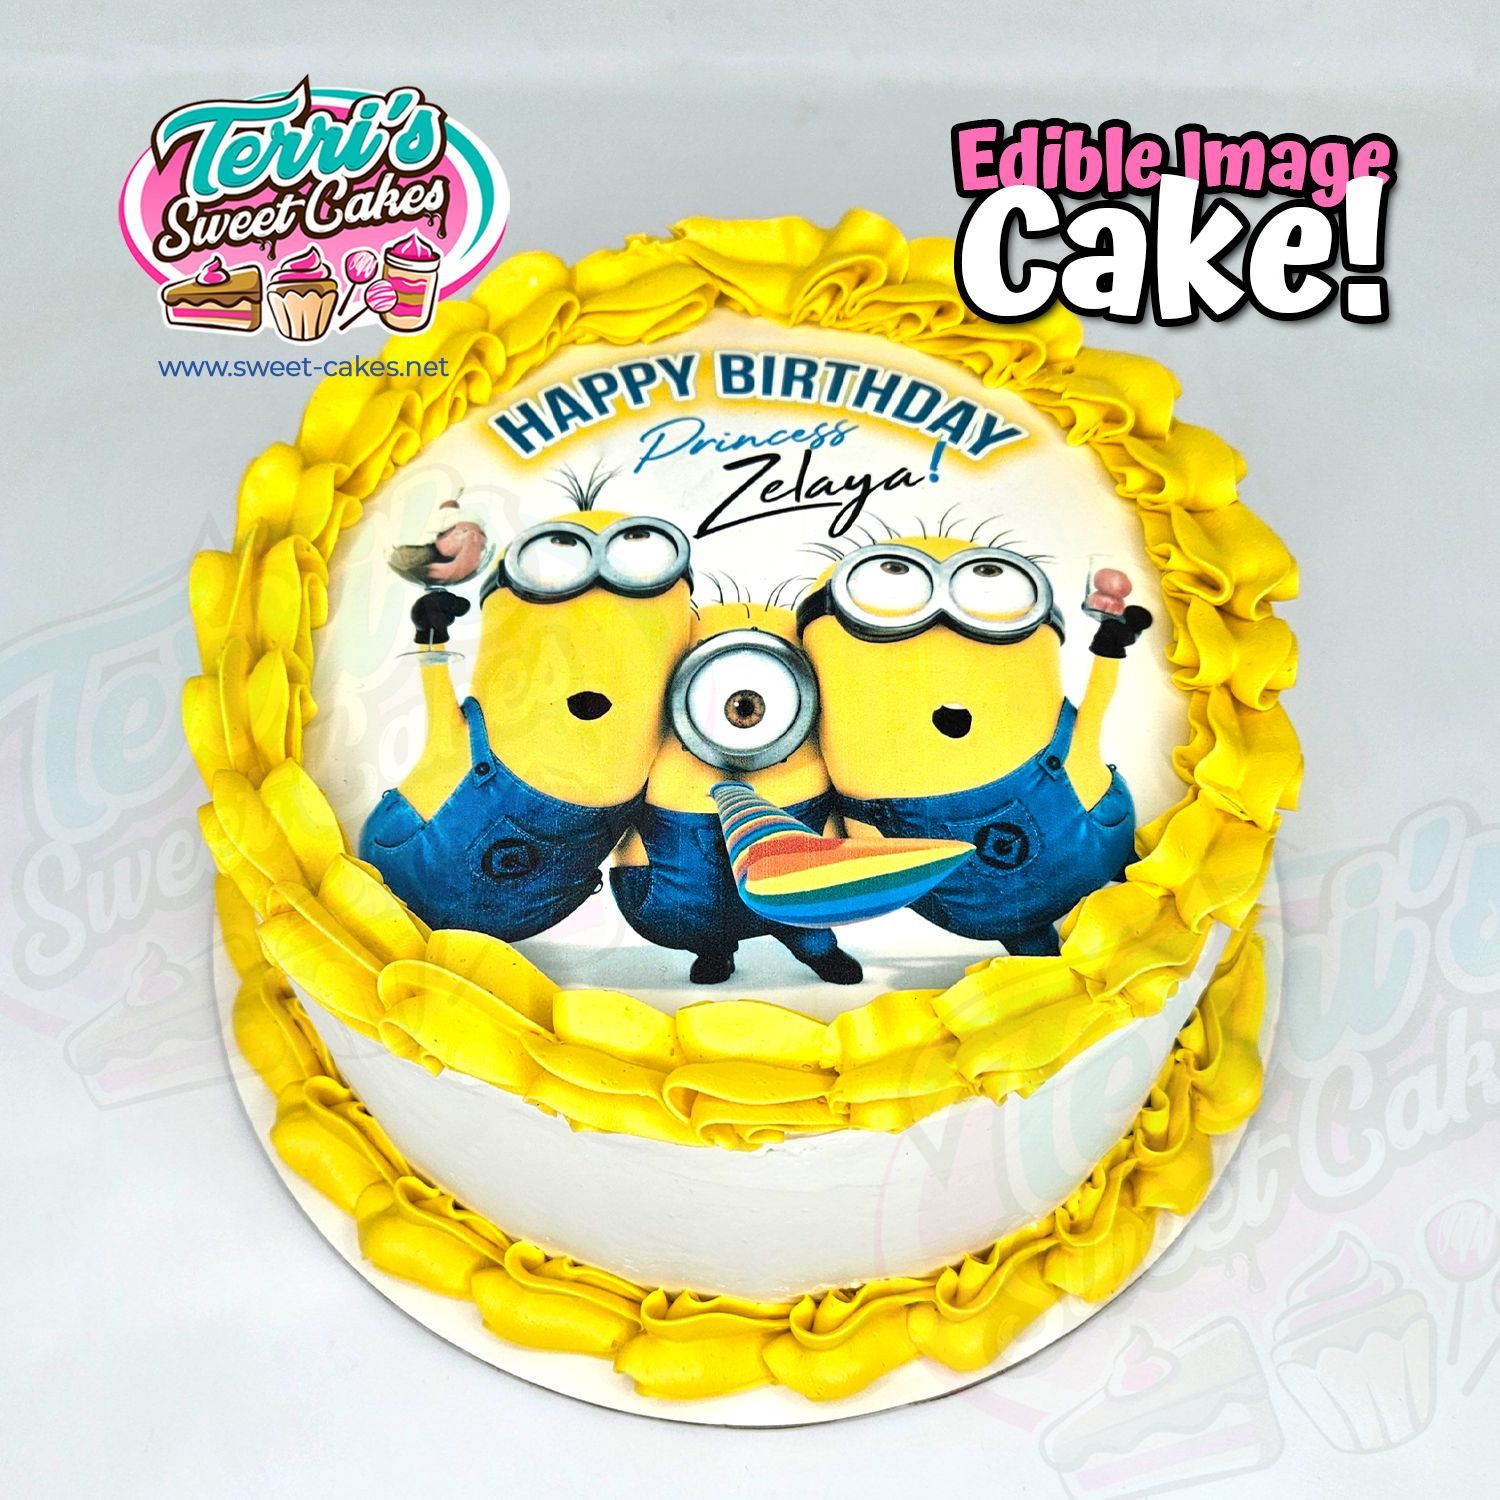 Edible Image Minion Cake by Terri's Sweet Cakes!